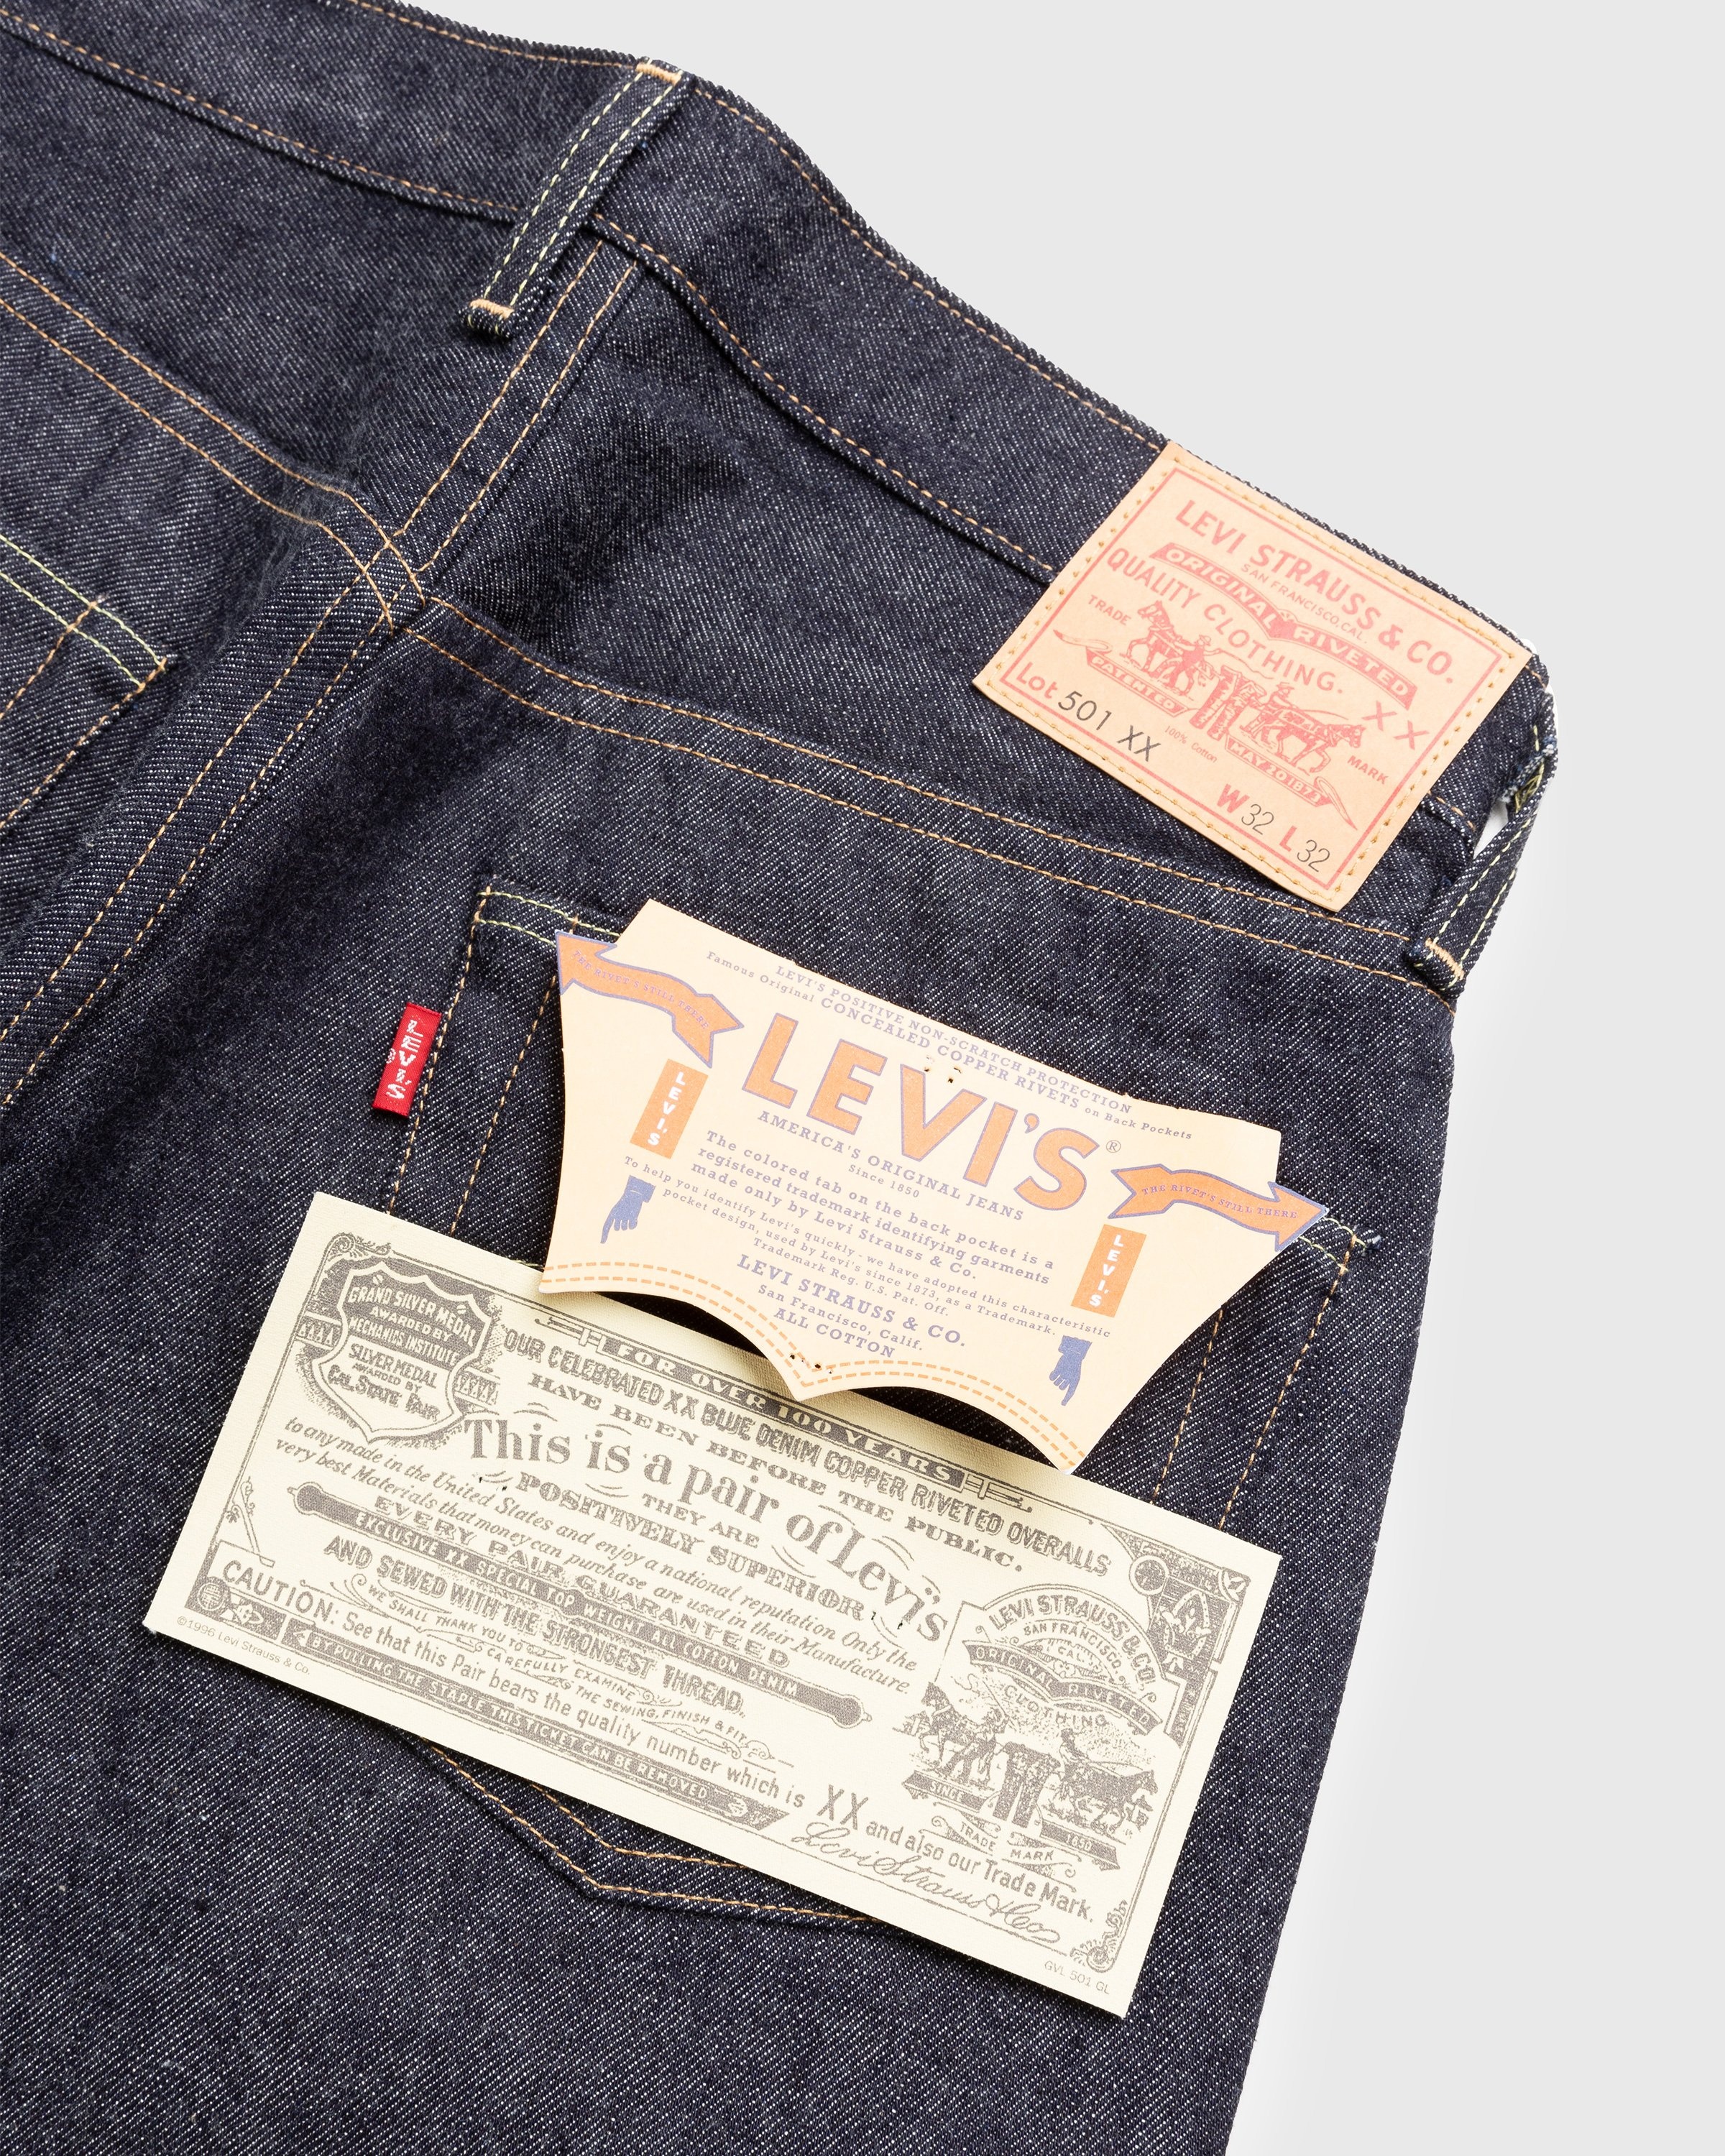 Levis 1954 501 Jeans Vintage Clothing - Rigid Dark Indigo Blue